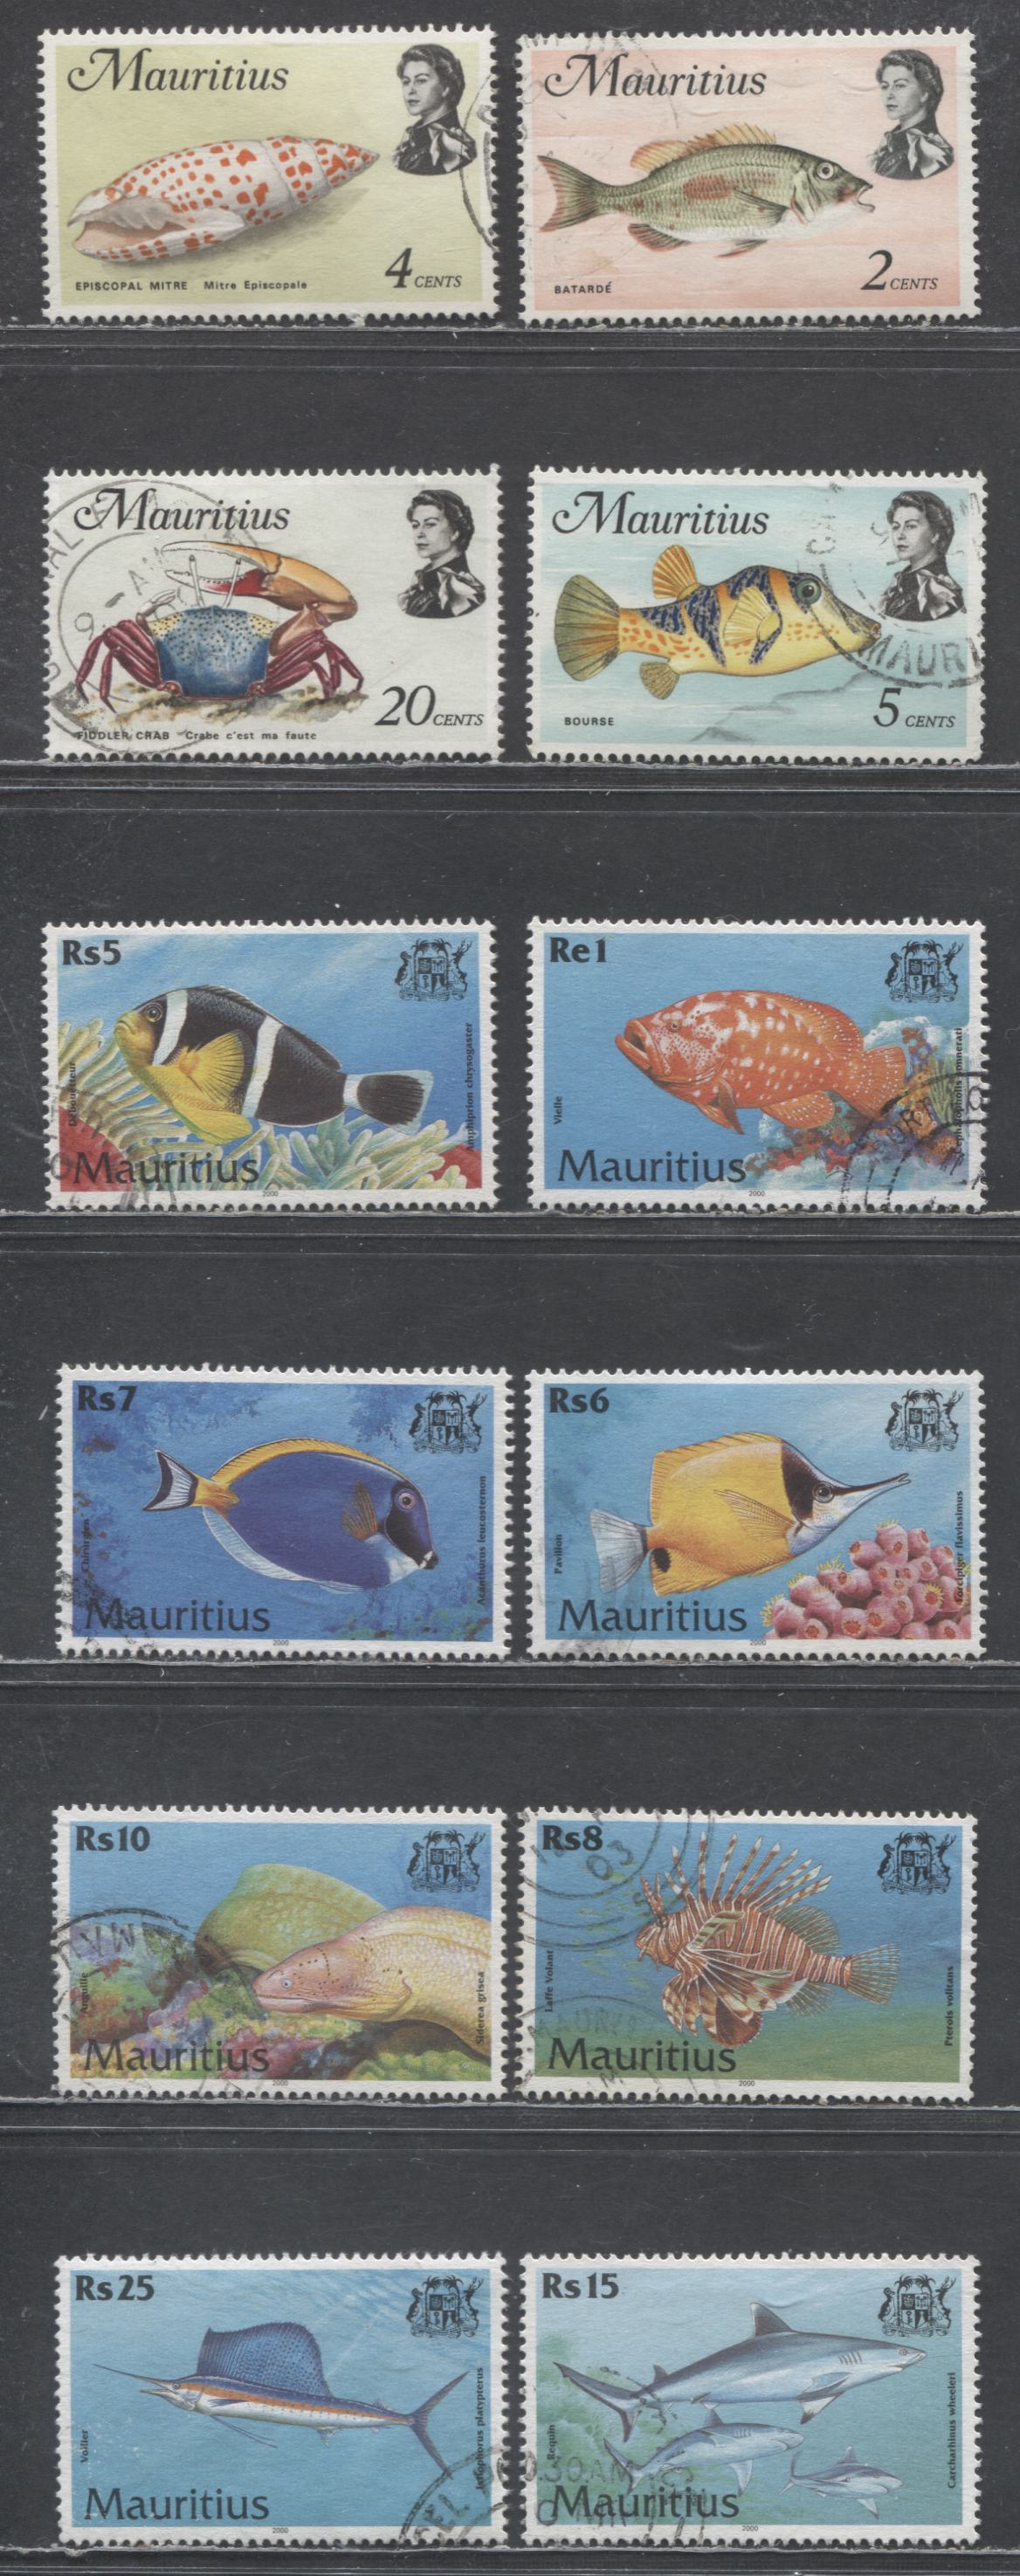 Lot 72 Mauritius SC#333b/921 1969-2000 Marine Life - Fish Issues, 12 Very Fine Used Singles, 2017 Scott Cat. $12.3